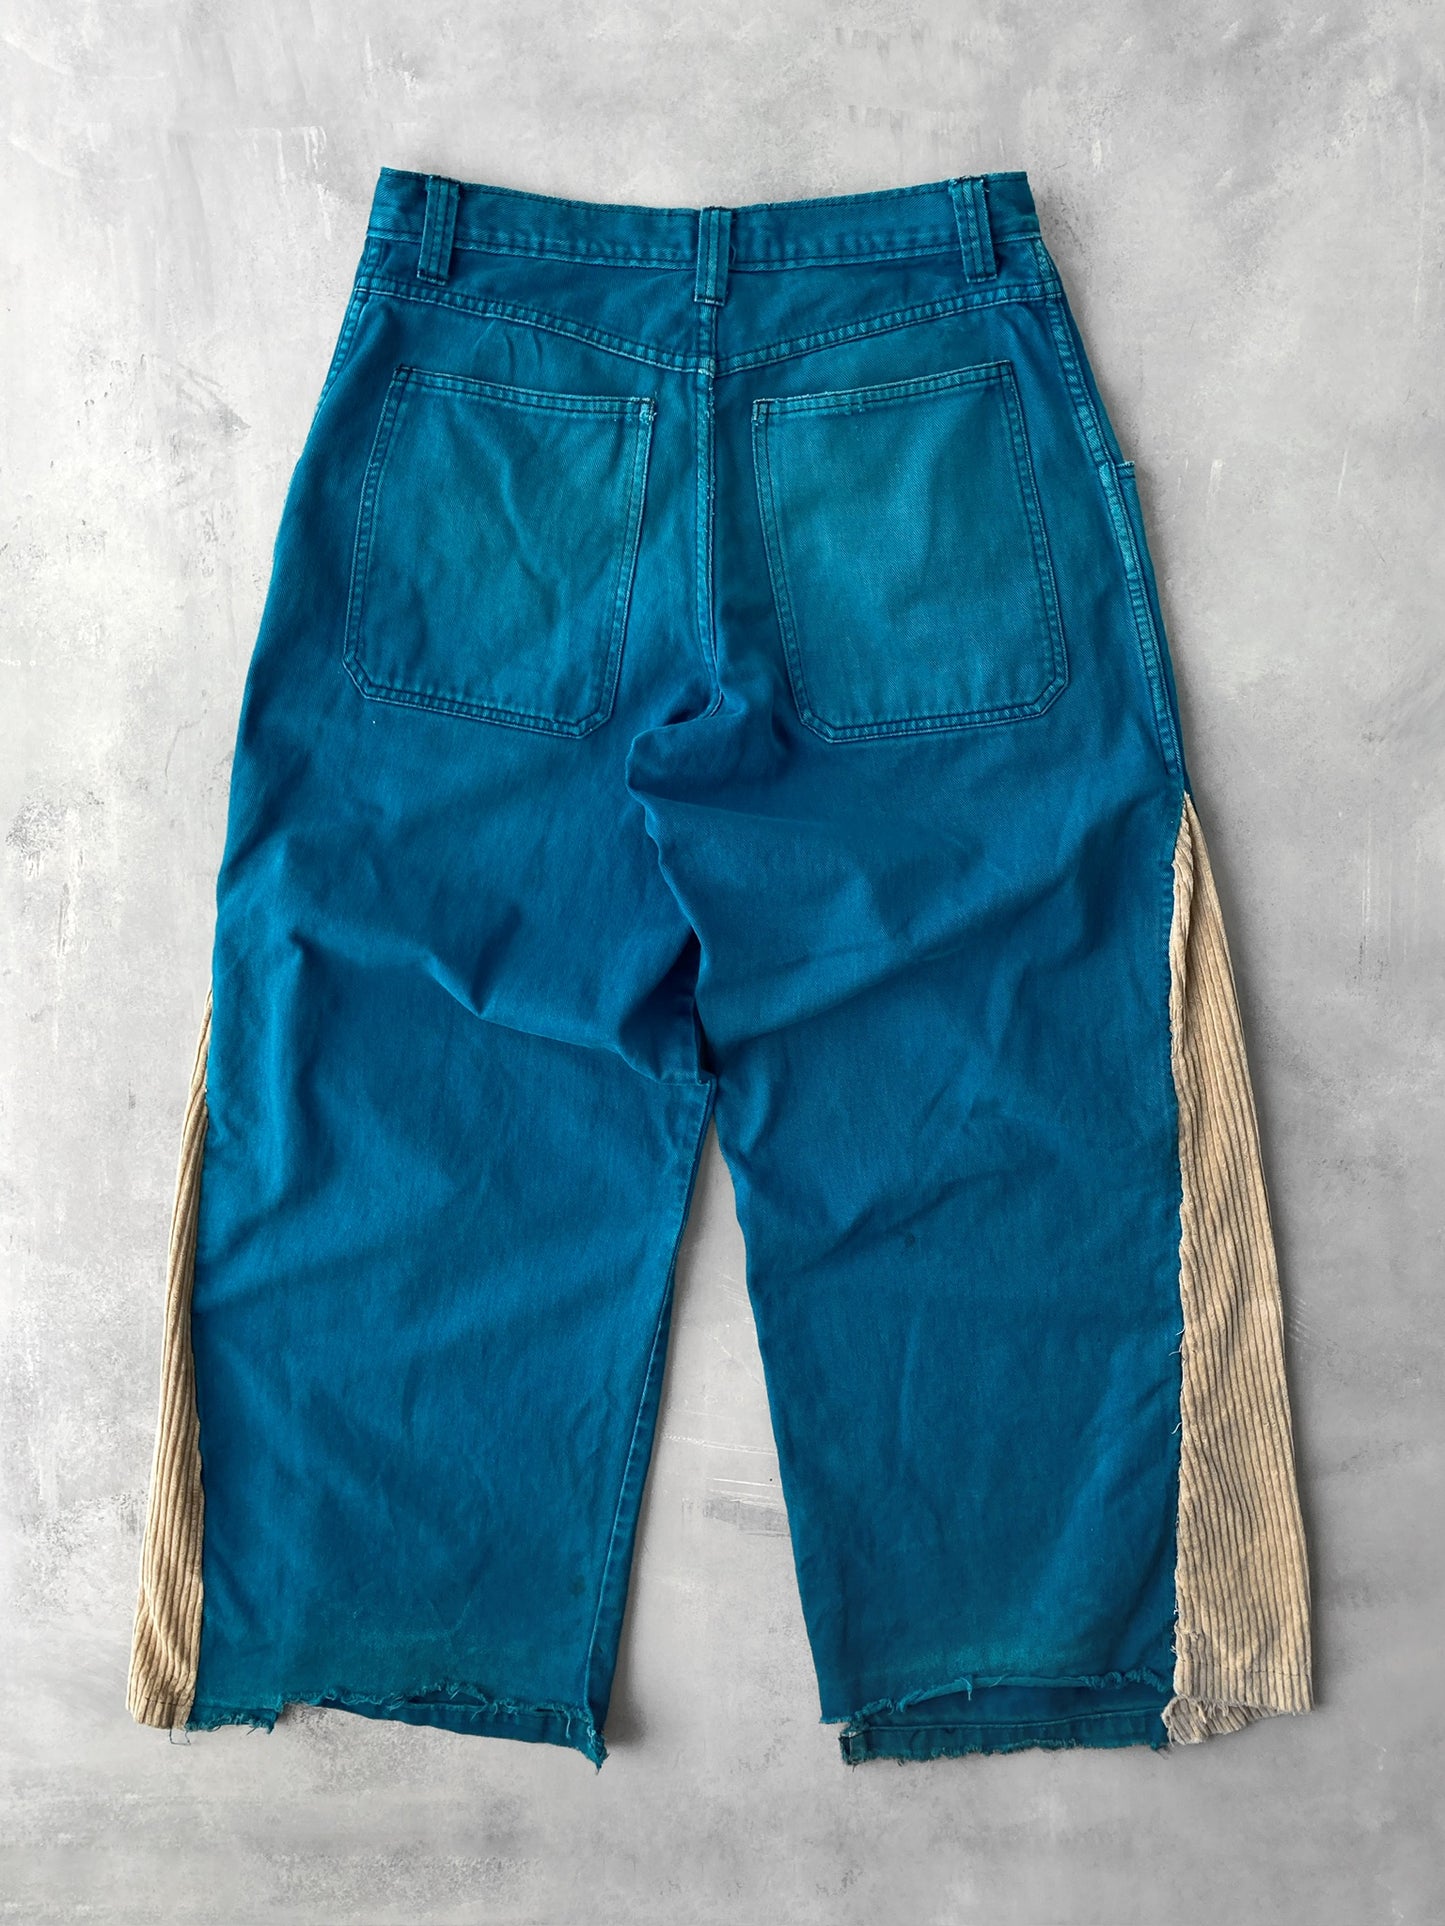 Custom Inset JNCO Jeans 90's - 34x32